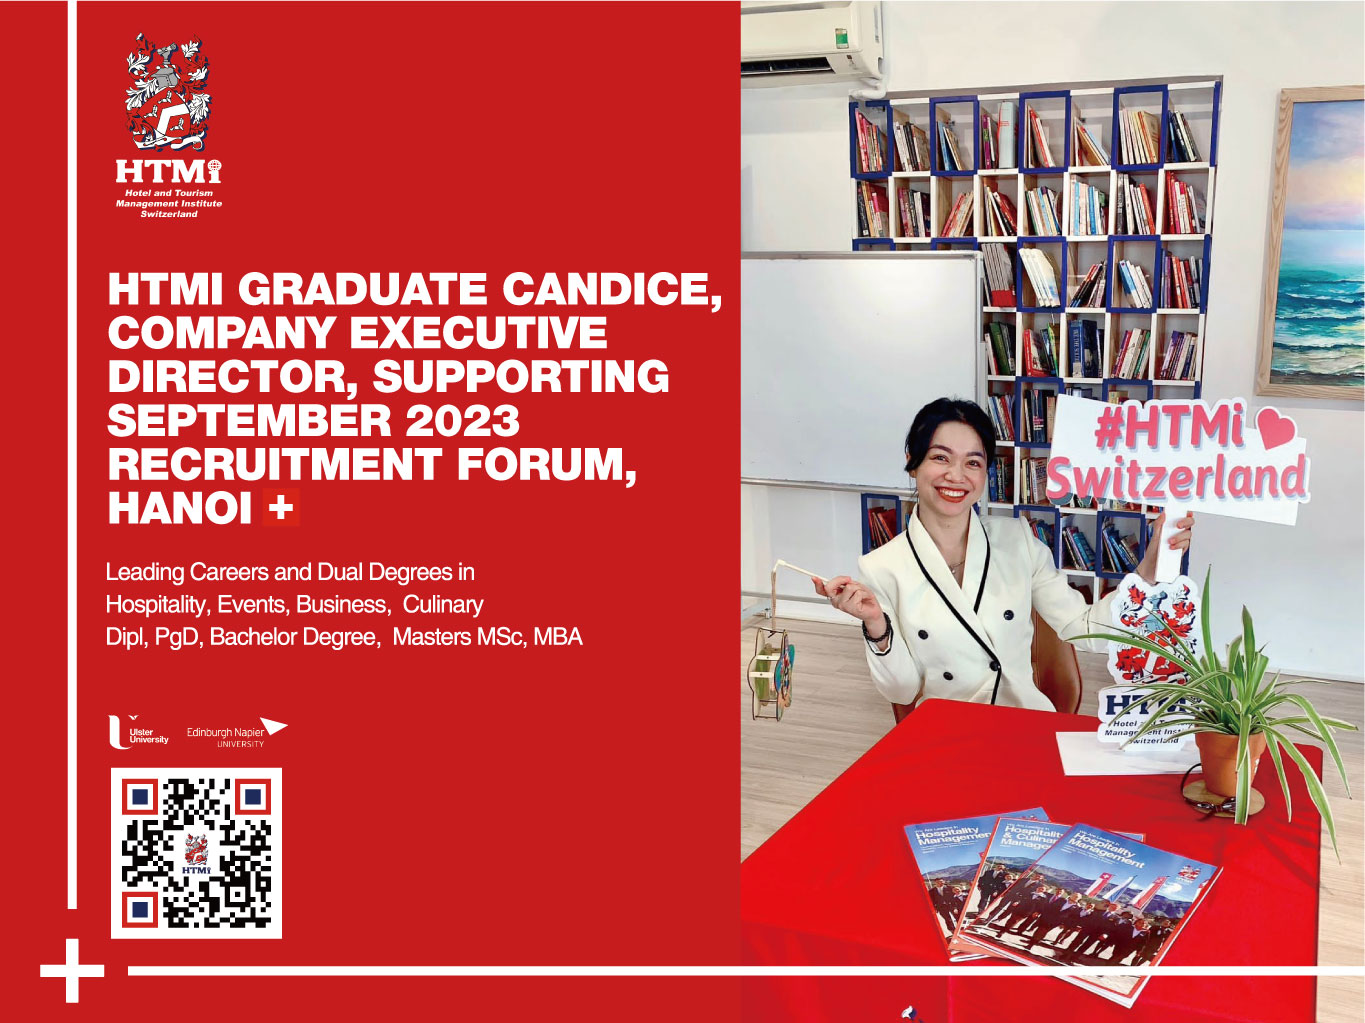 HTMi Graduate Candice, Company Executive Director, Supporting September 2023 Recruitment Forum, Hanoi